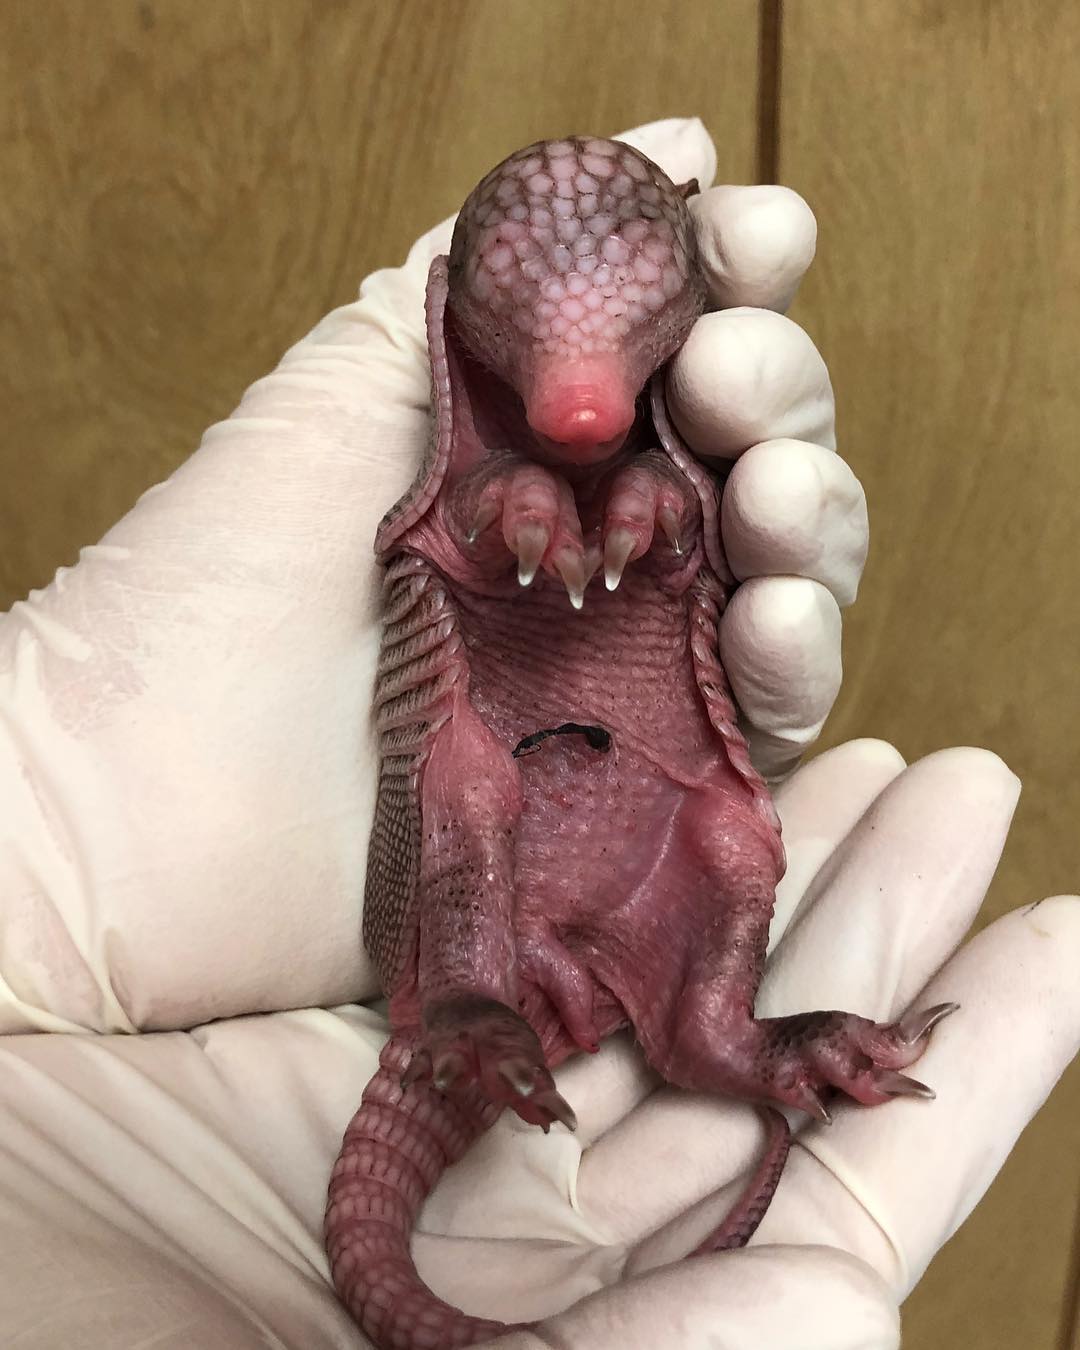 An alien-like baby armadillo.